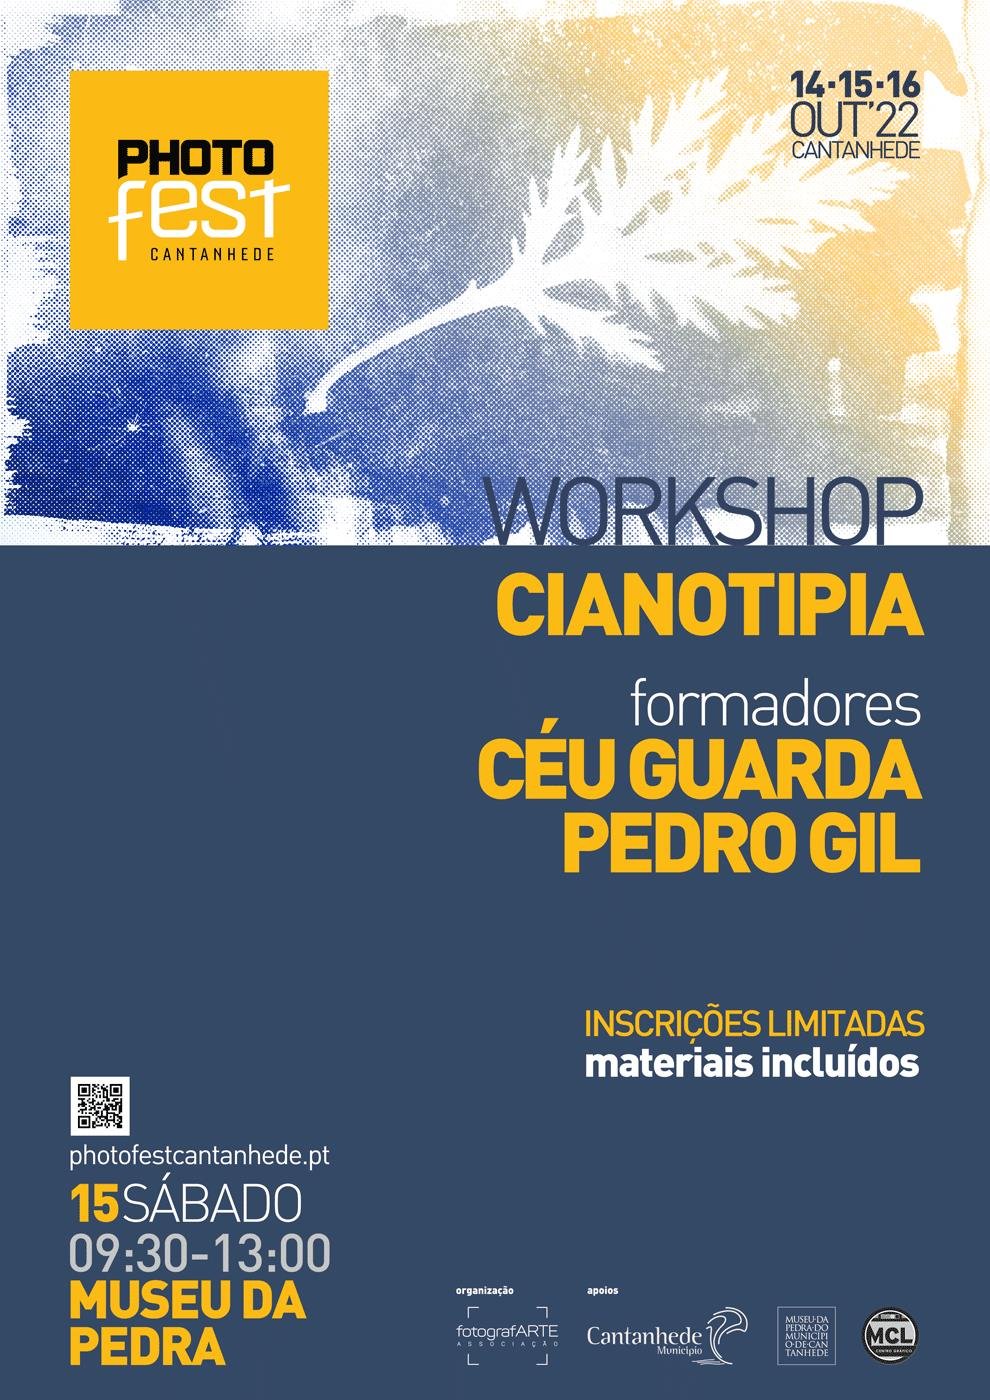 PHOTOFEST - Workshop Cianotipia